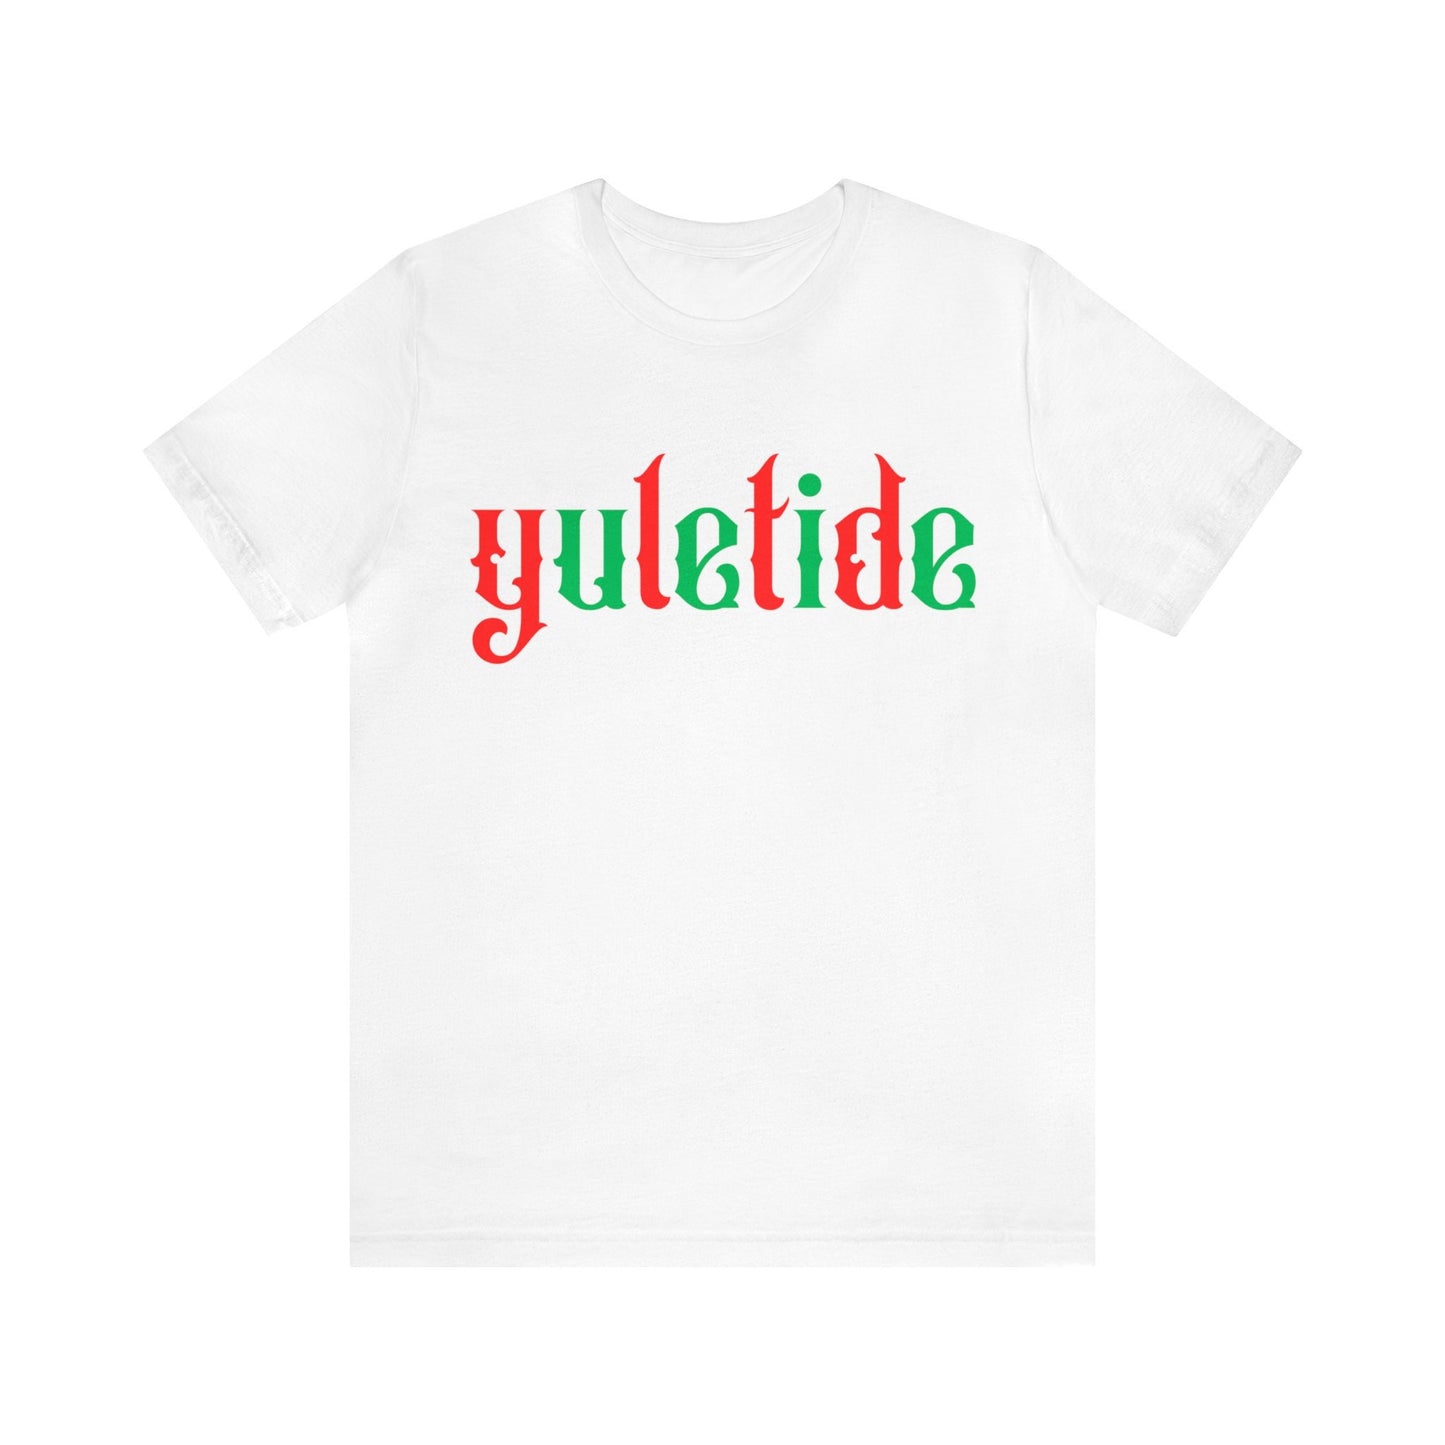 Yuletide Shirt, Christmas T-Shirt, Holiday T-Shirts, Matching Shirts, Gift For Her